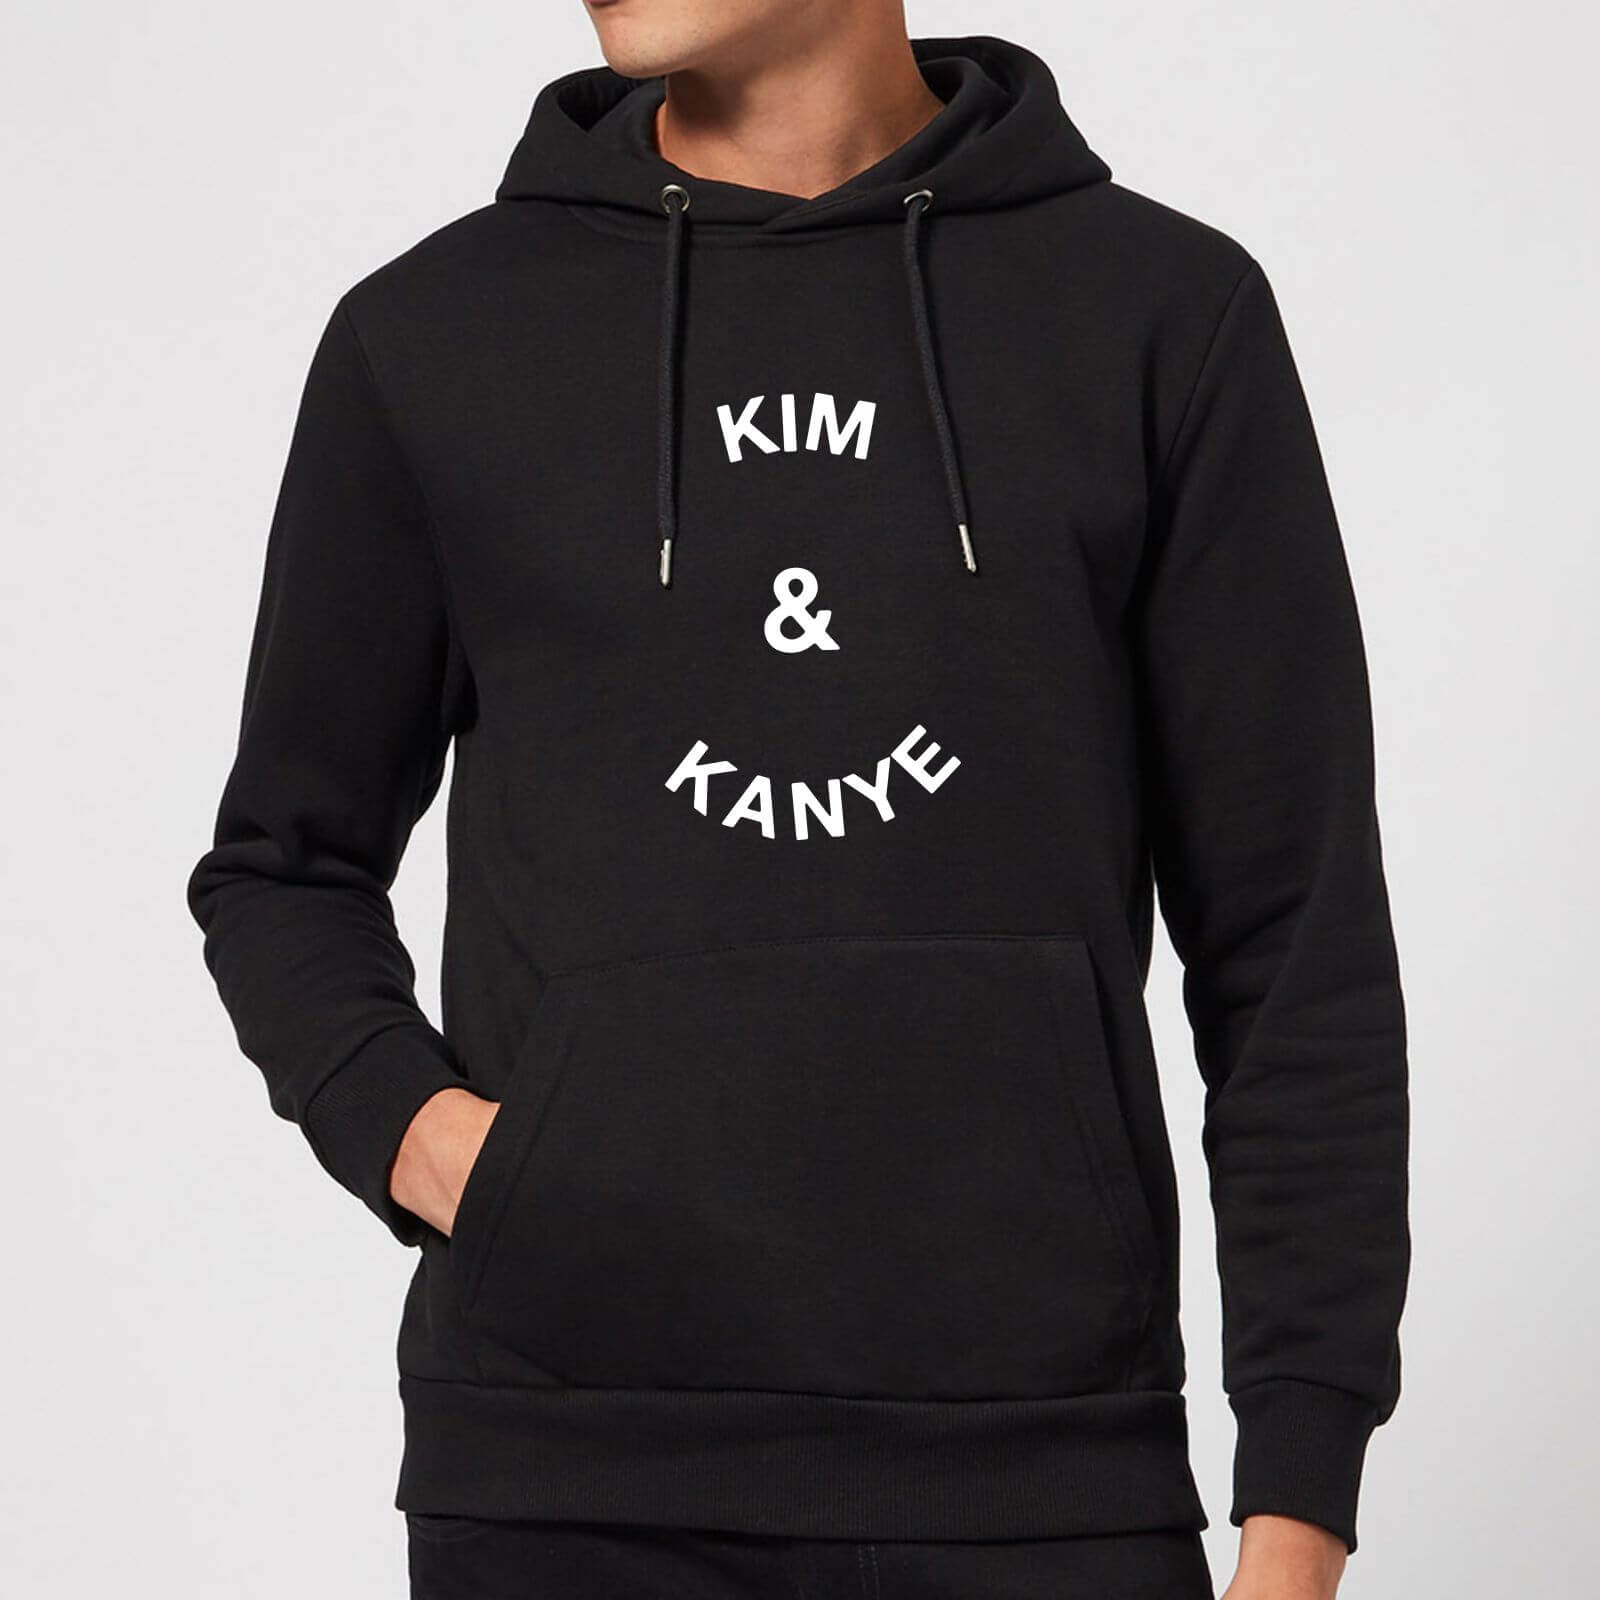 Kim & Kanye Hoodie - Black - L - Black